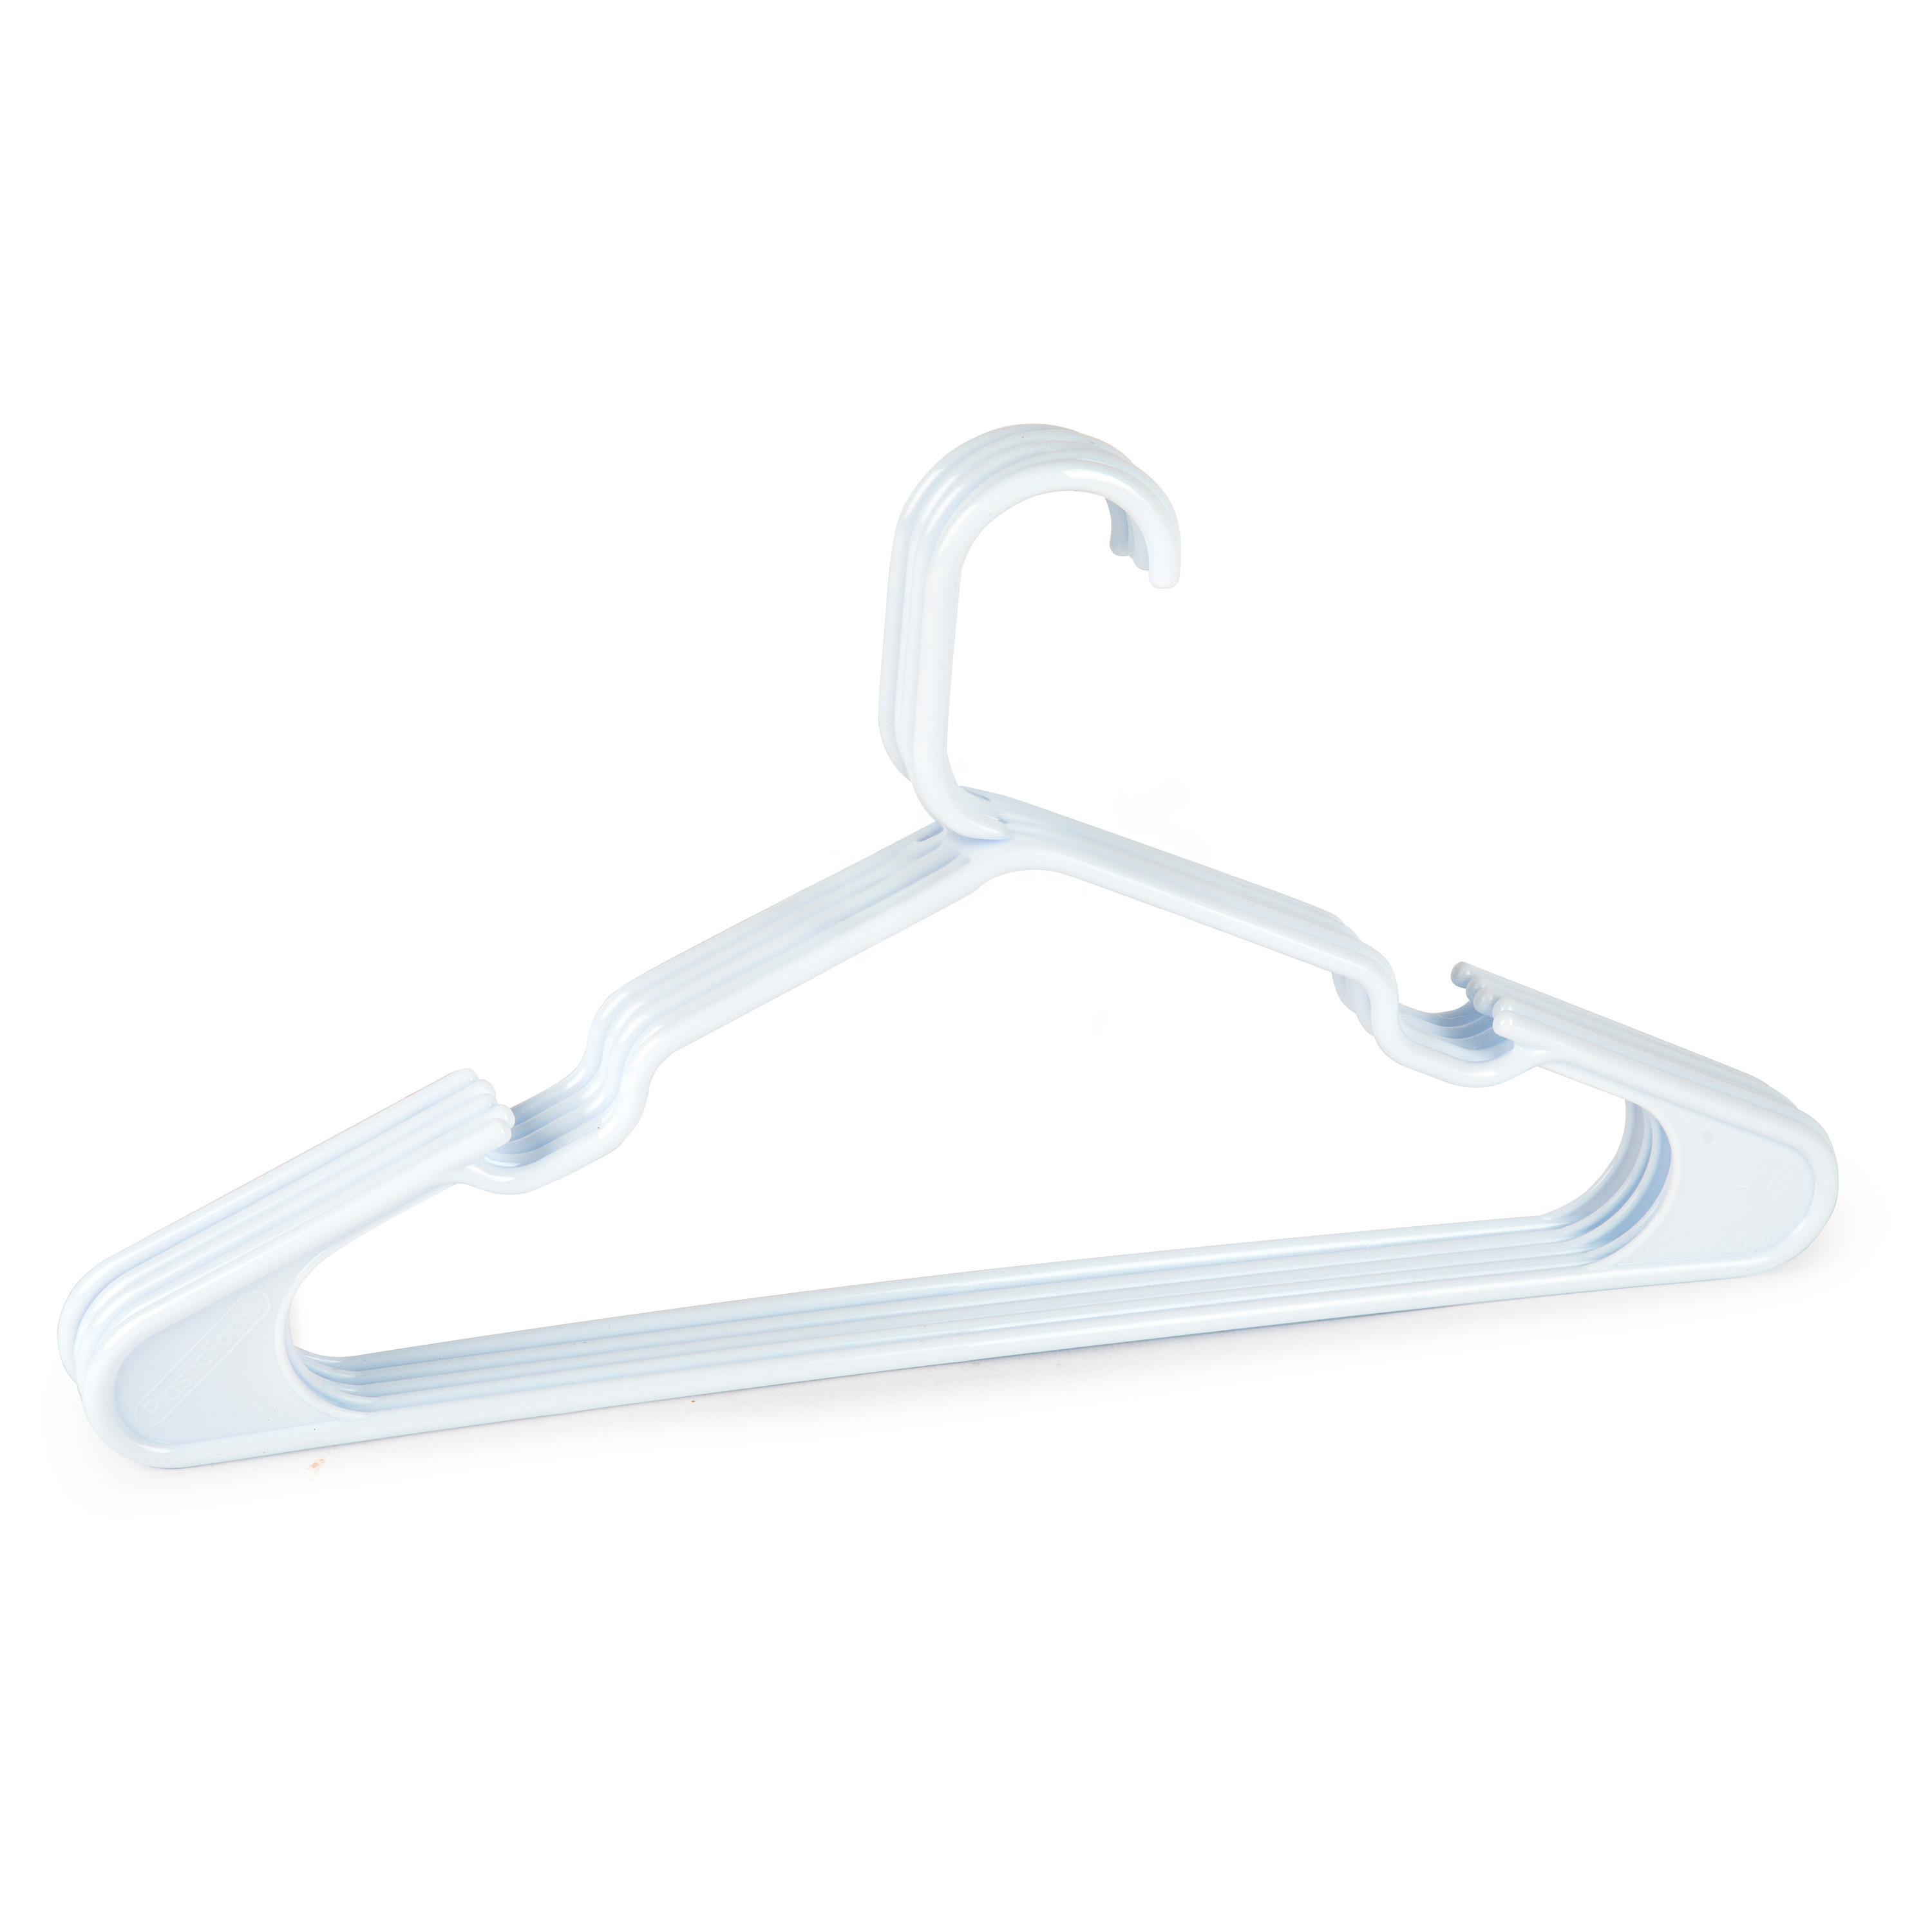 PlasticForte Kledinghangers set - 5x stuks - wit- kunststof - x 23 cm - kledingkast hangers/kleerhangers -